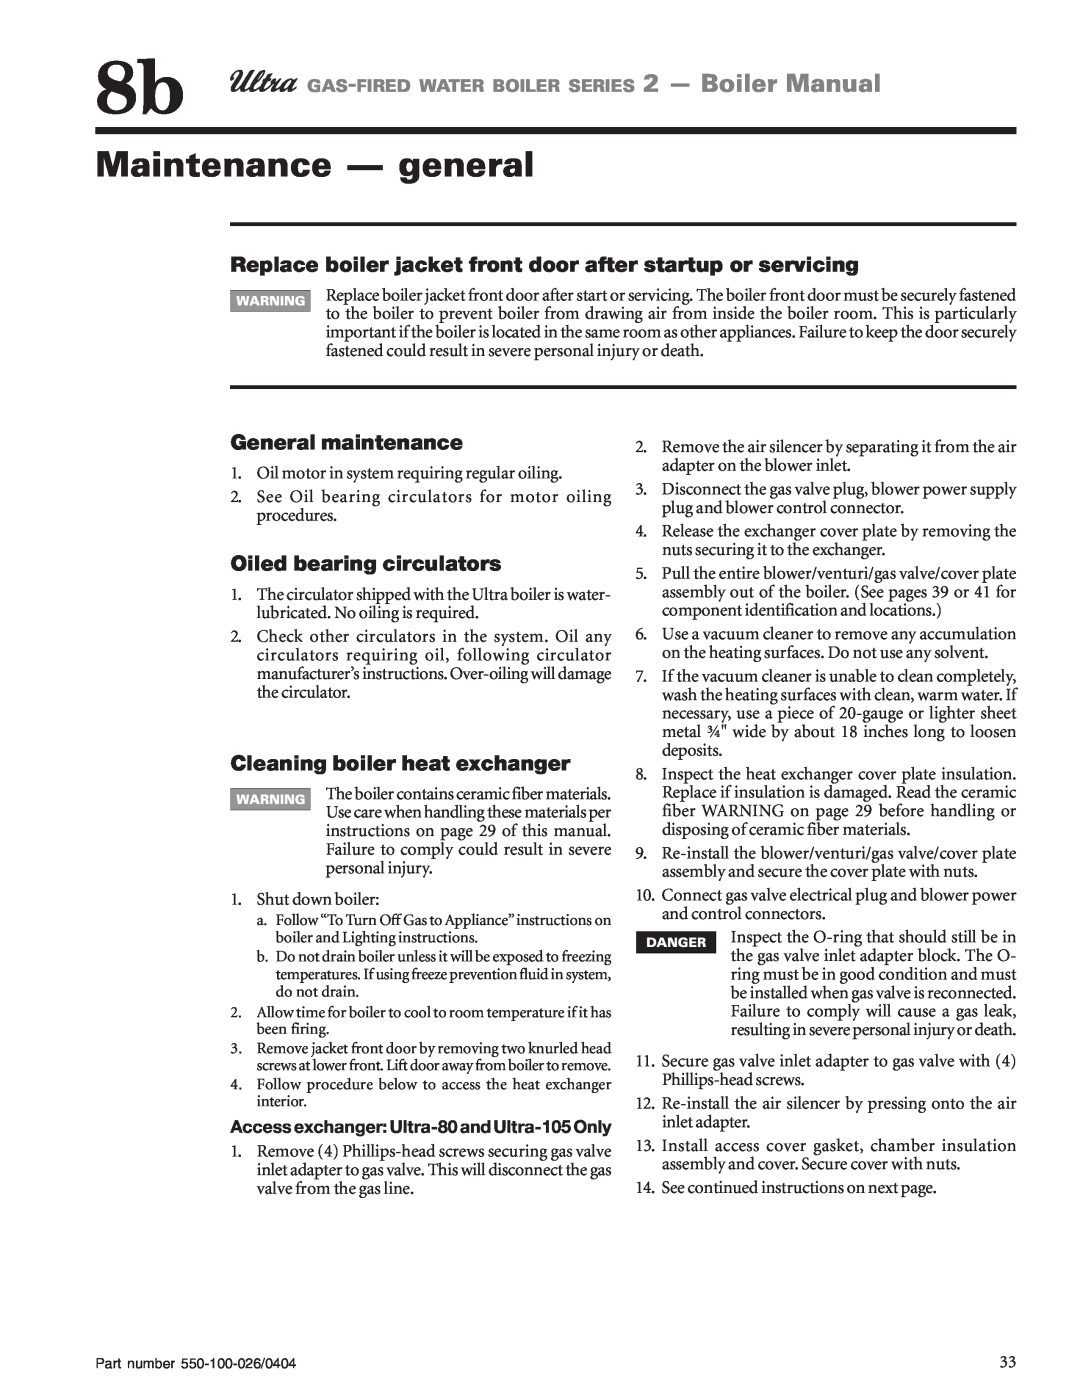 Ultra electronic 80 Maintenance - general, General maintenance, Oiled bearing circulators, Cleaning boiler heat exchanger 